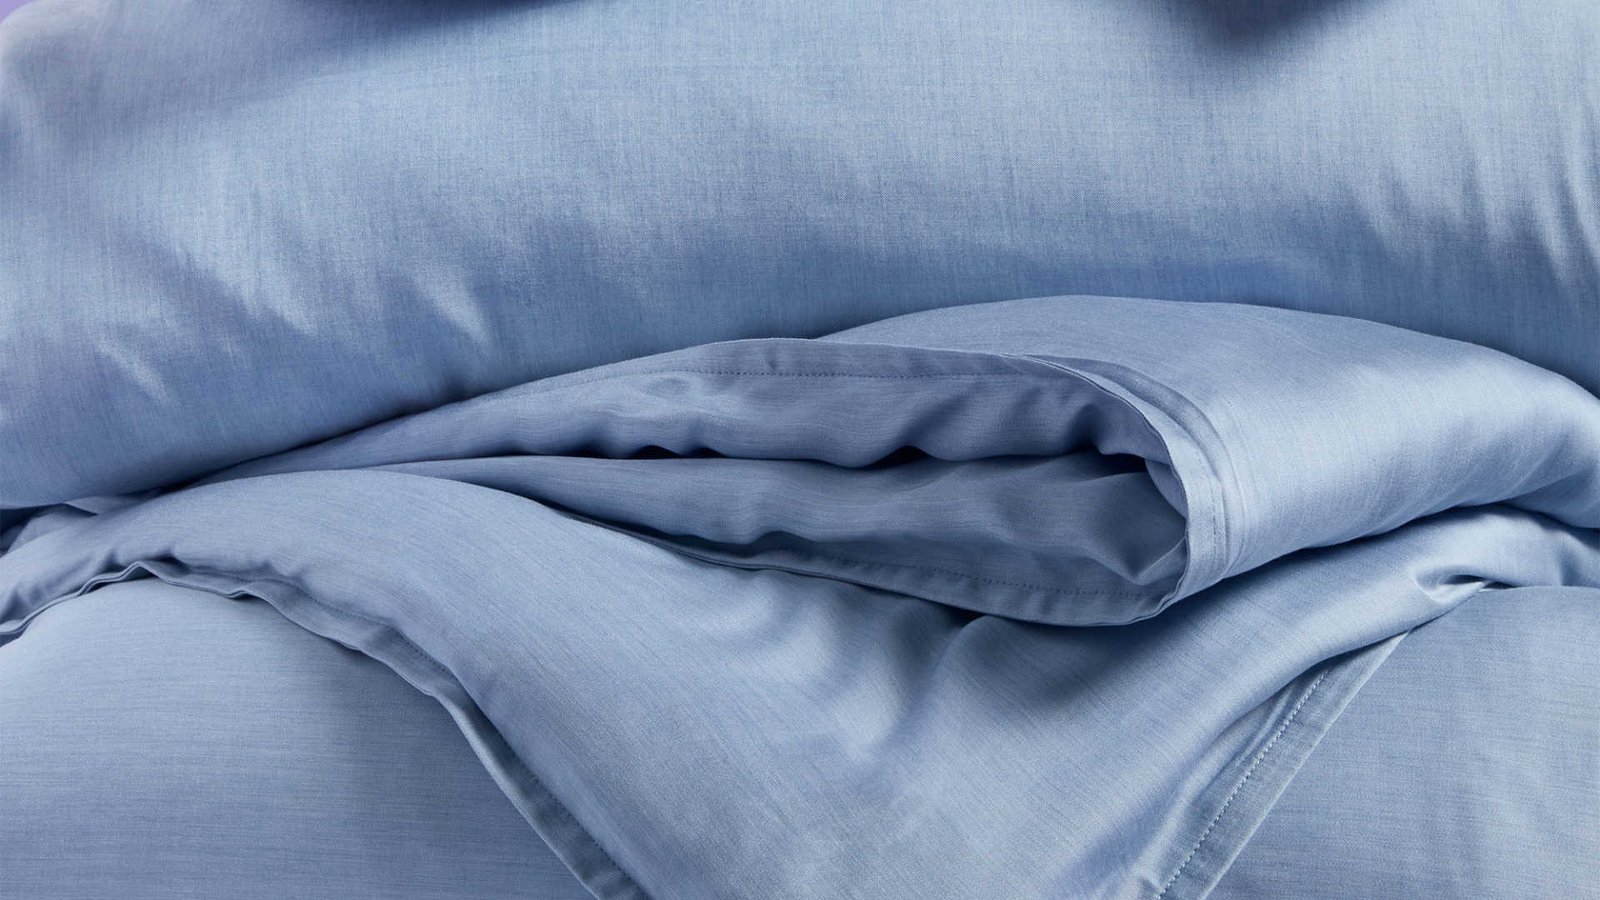 Blue sheet and a soft blue comforter.